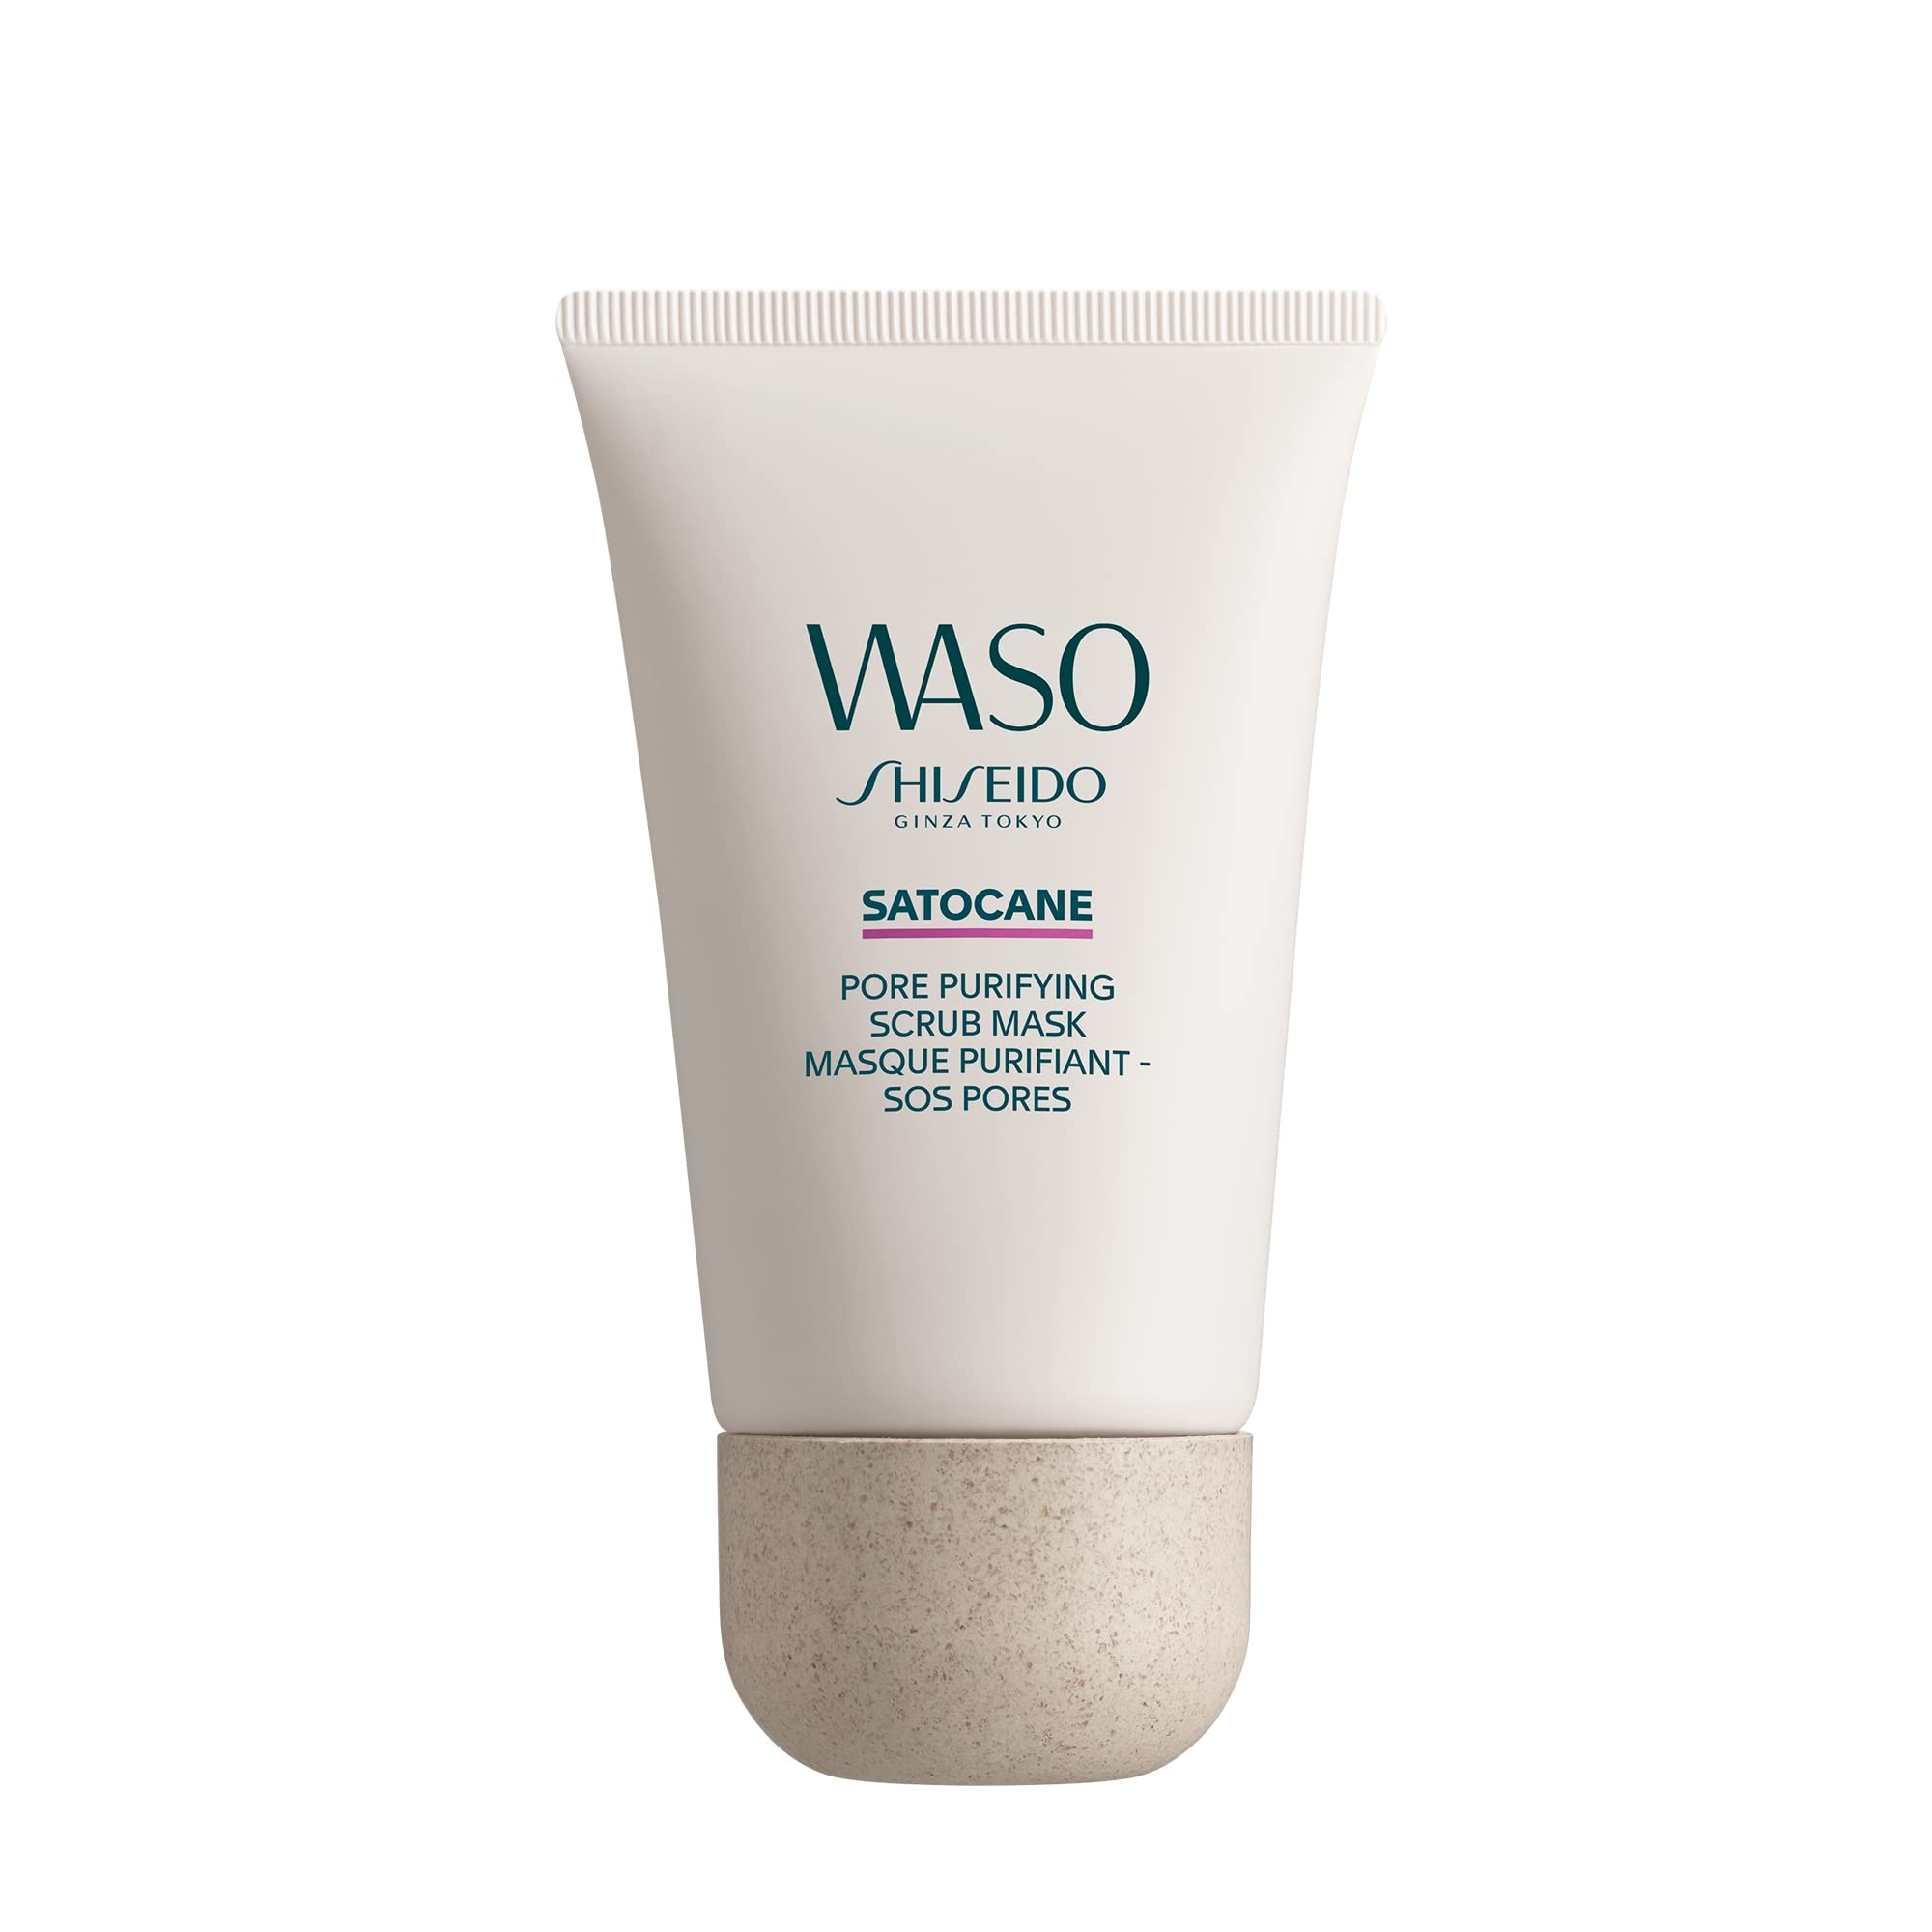 Shiseido WASO Satocane Scrub Mask